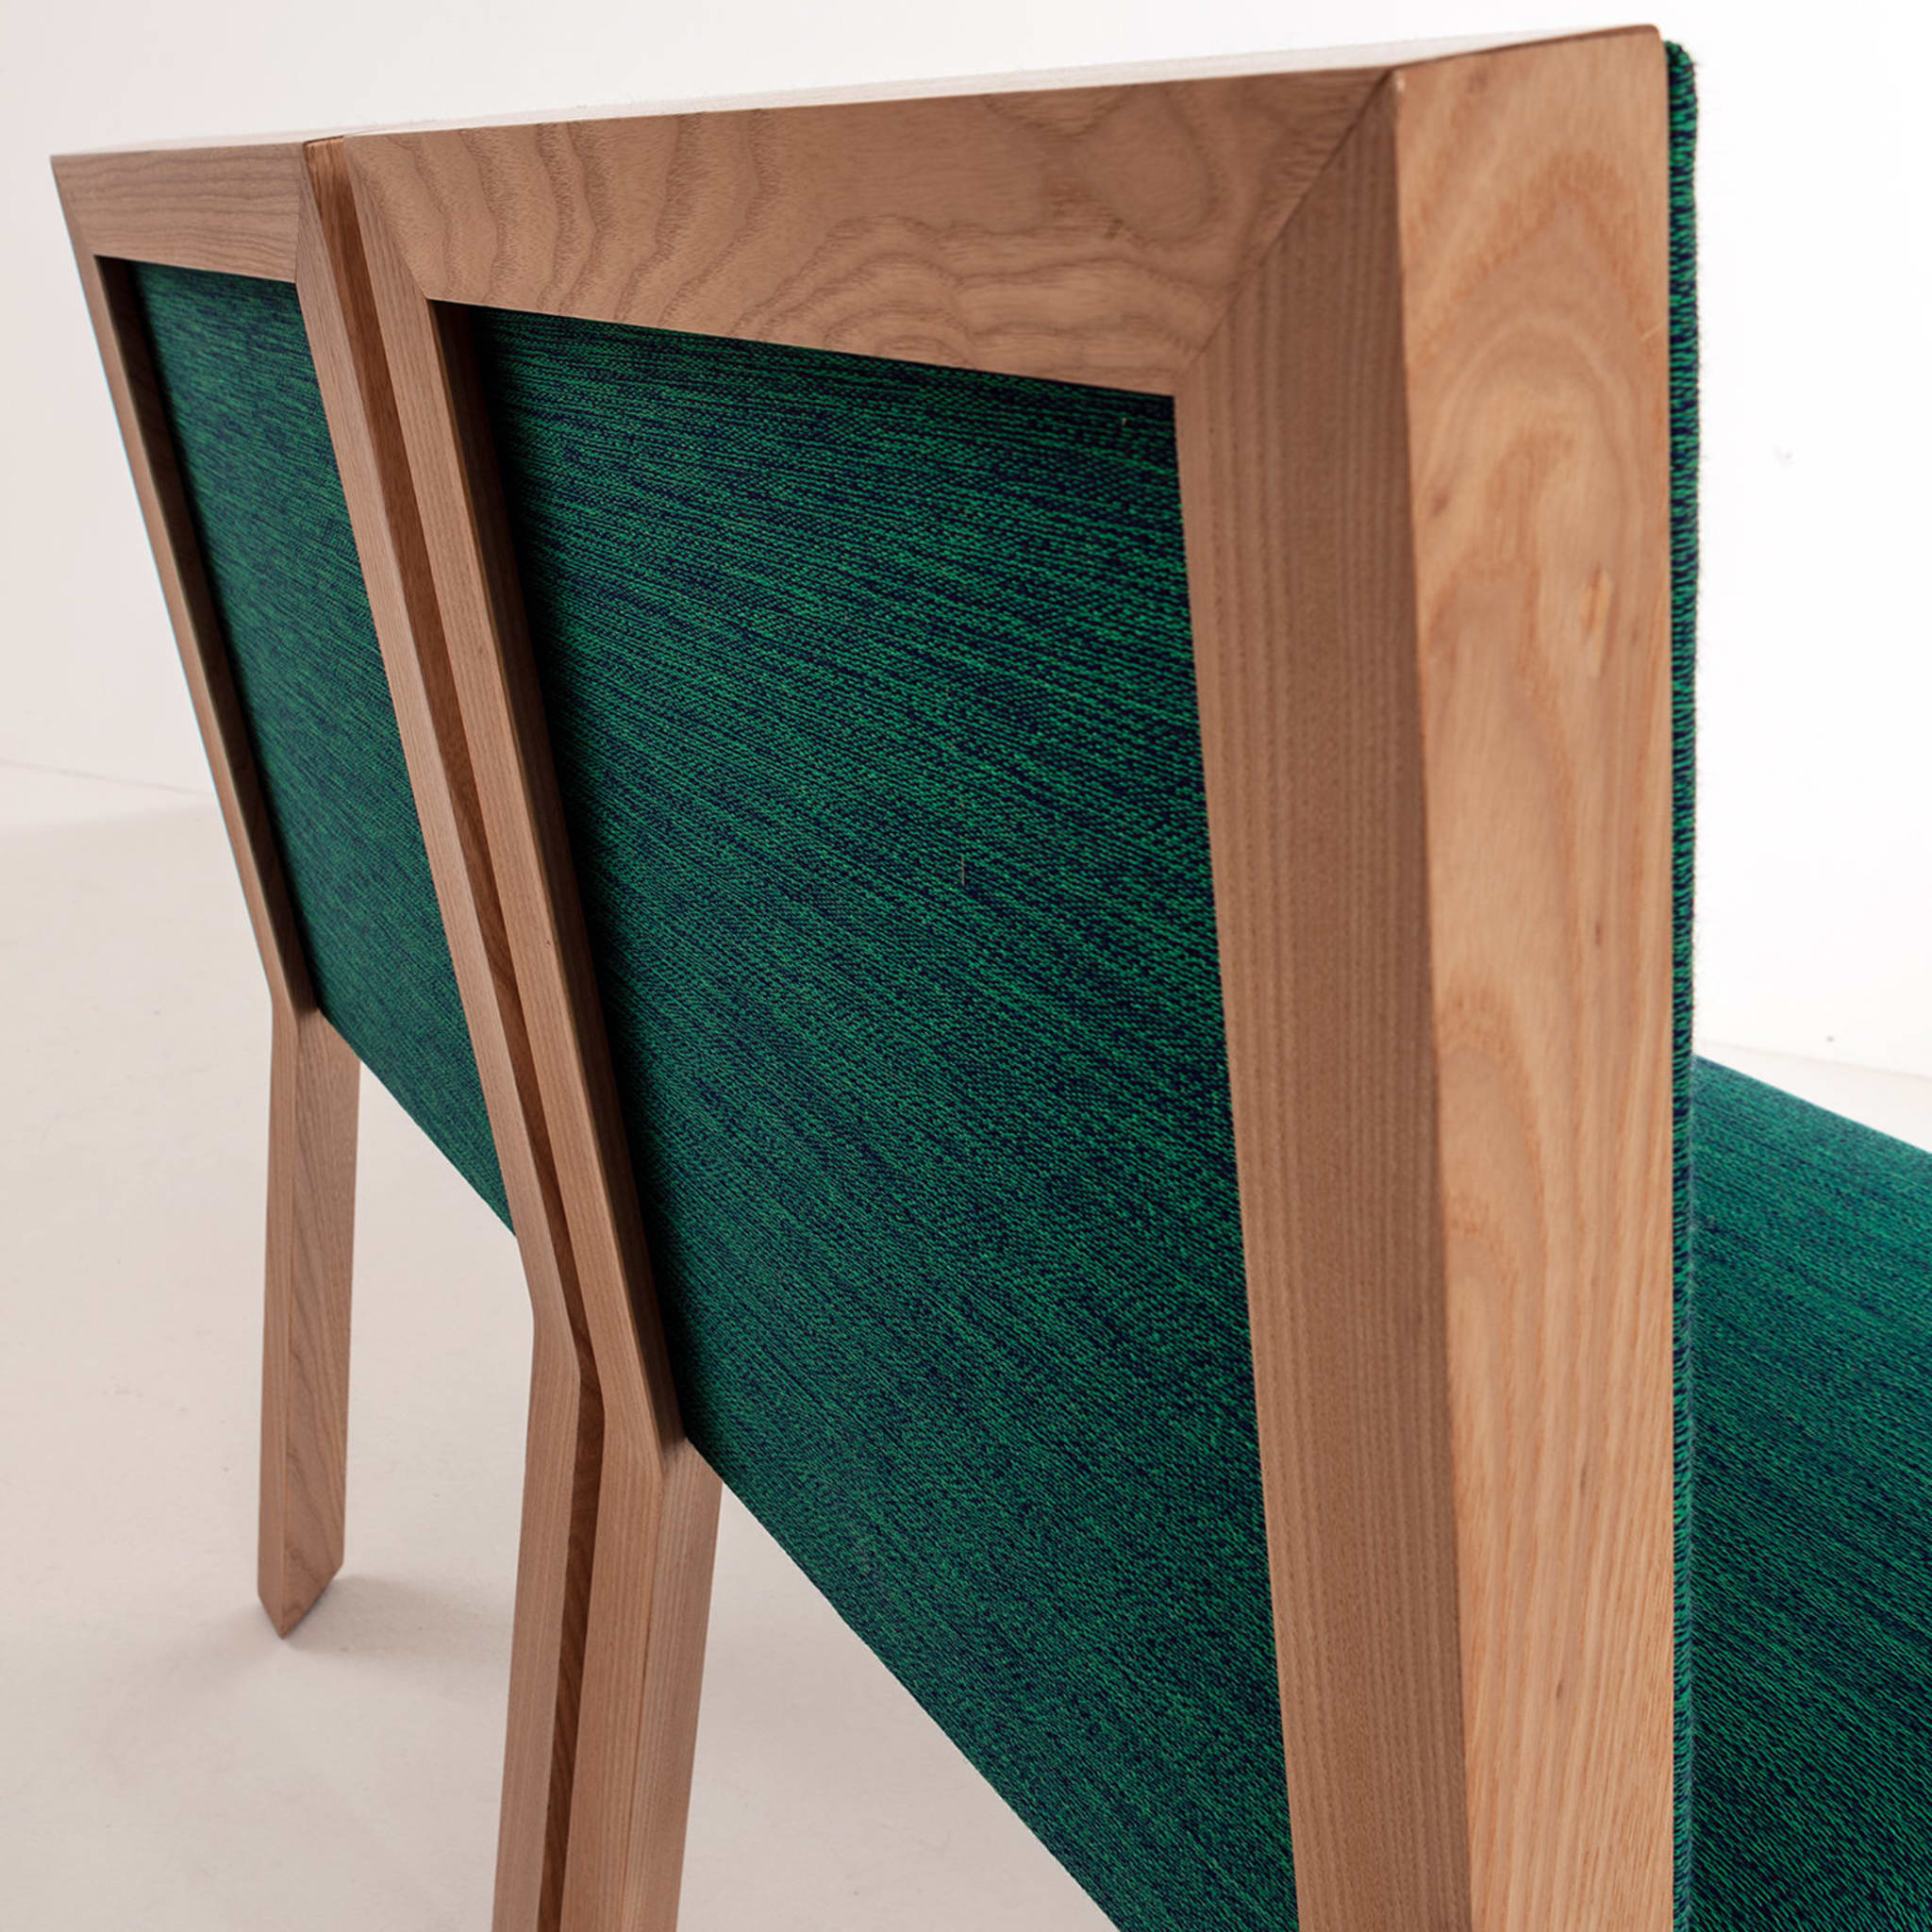 BD 20 L Chair by Bartoli Design - Alternative view 1